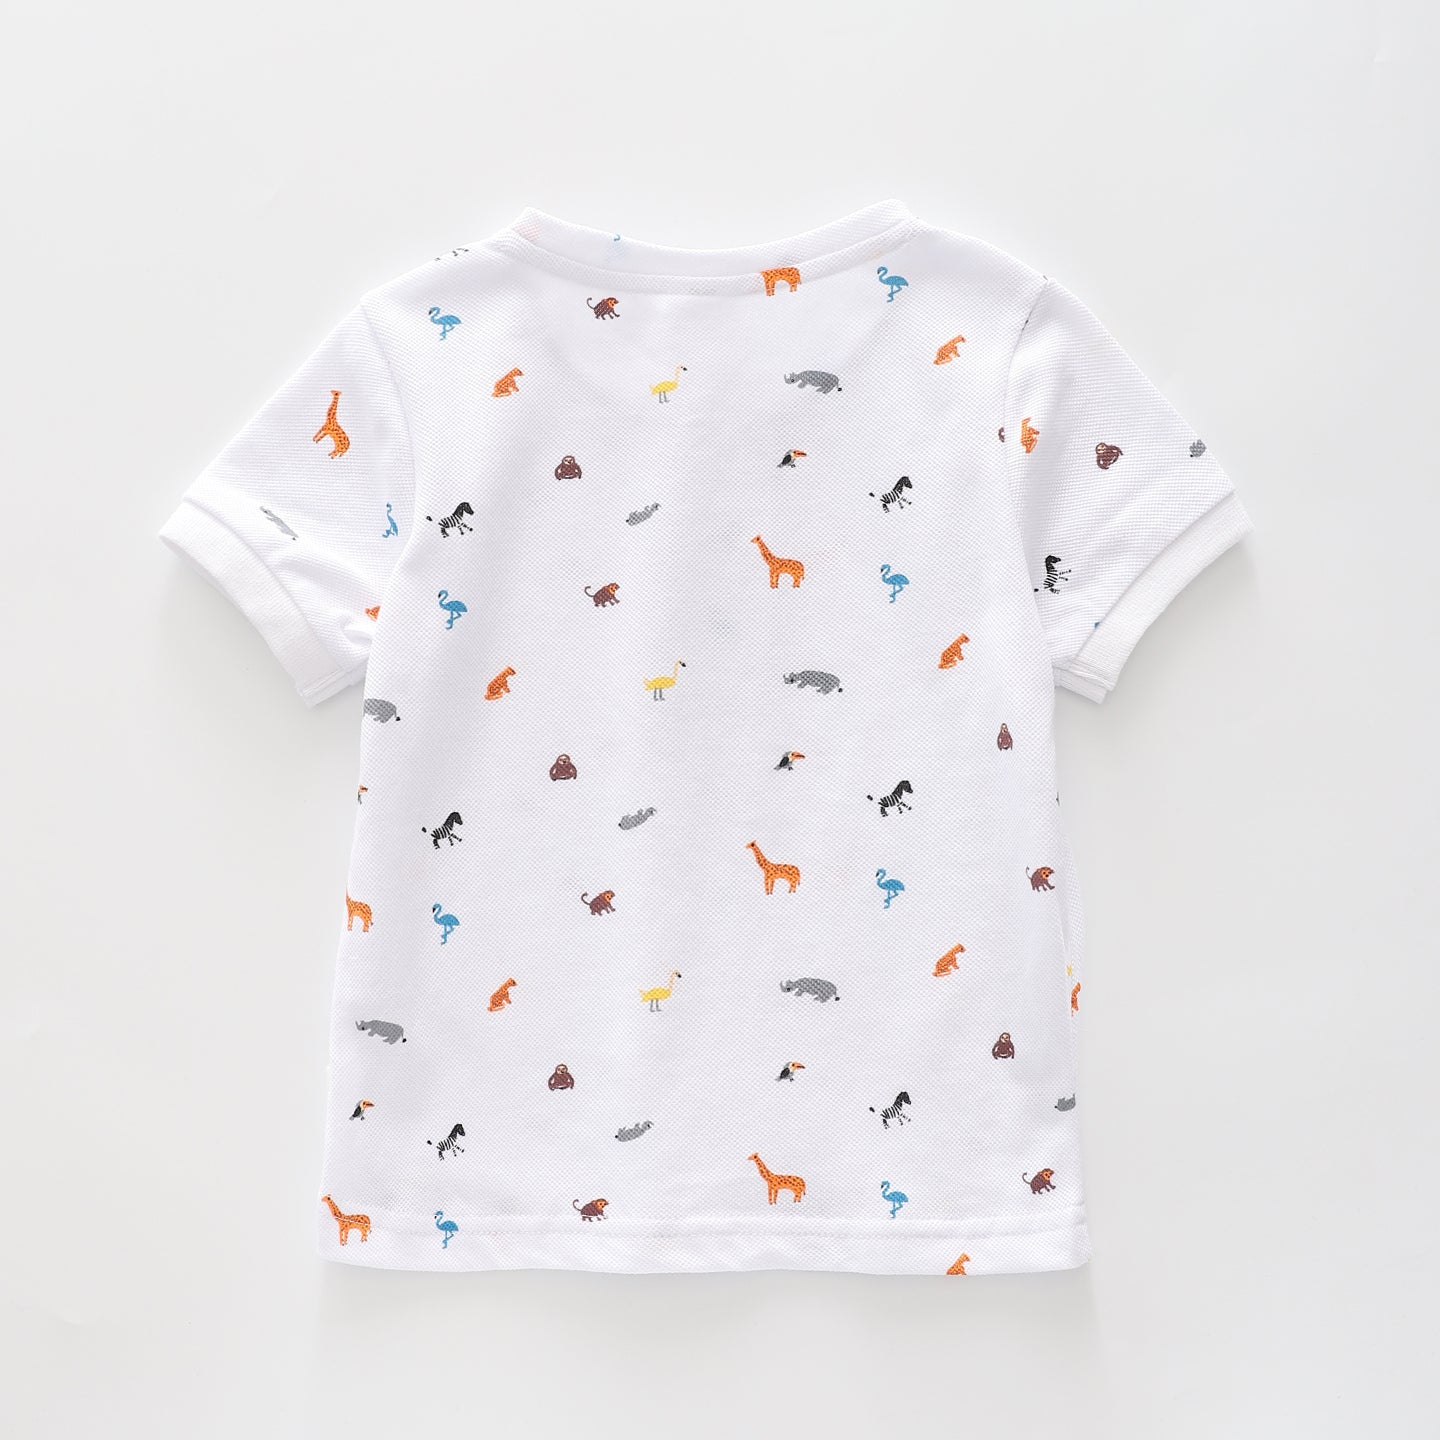 Boy's White Pique Shirt With Animal Print